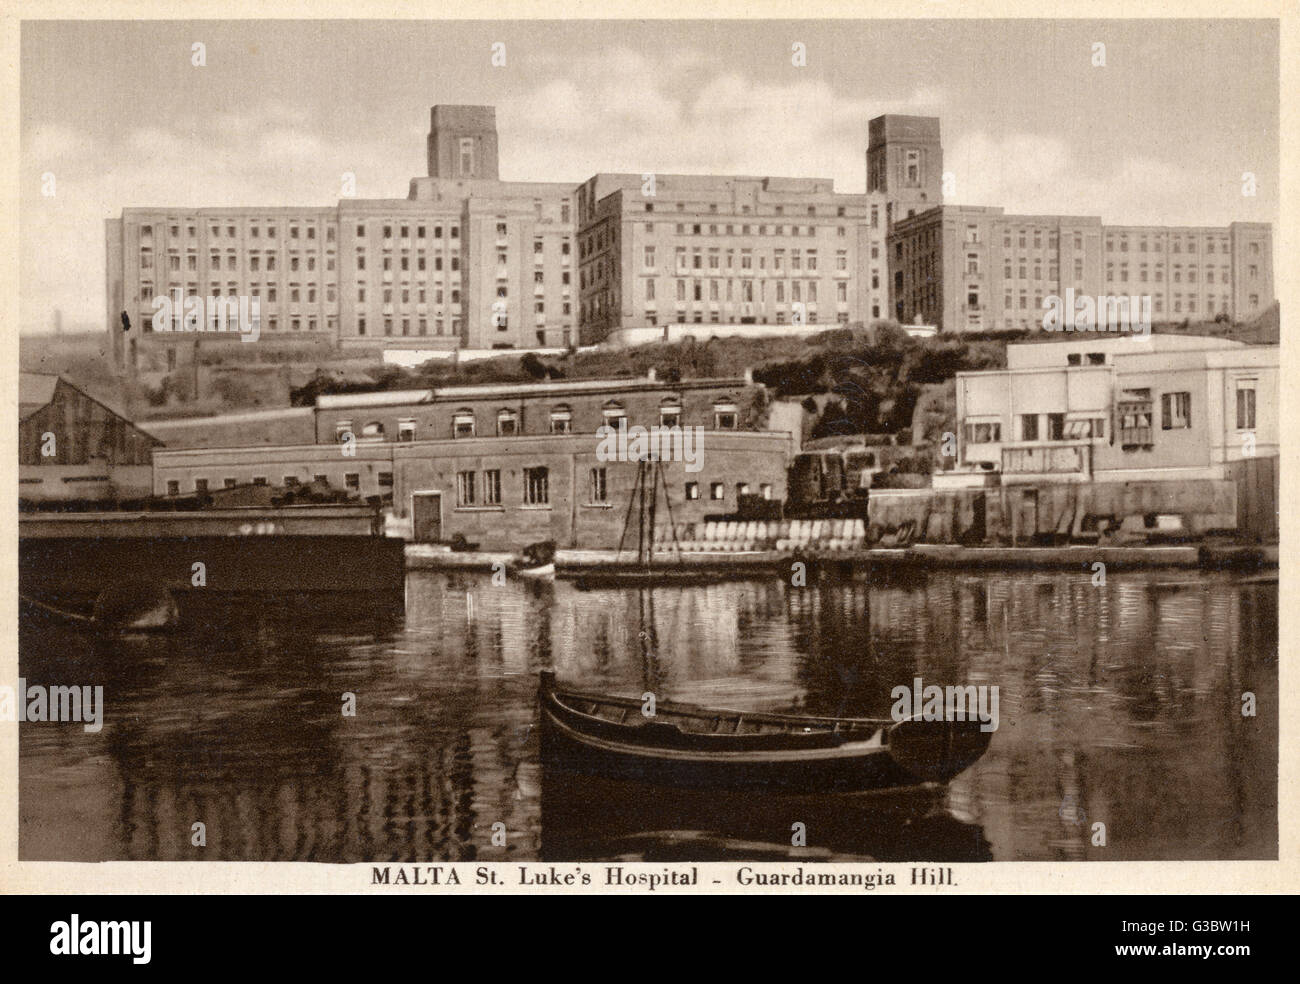 Malta - St. Luke's Hospital - Guardamangia Hill Stockfoto